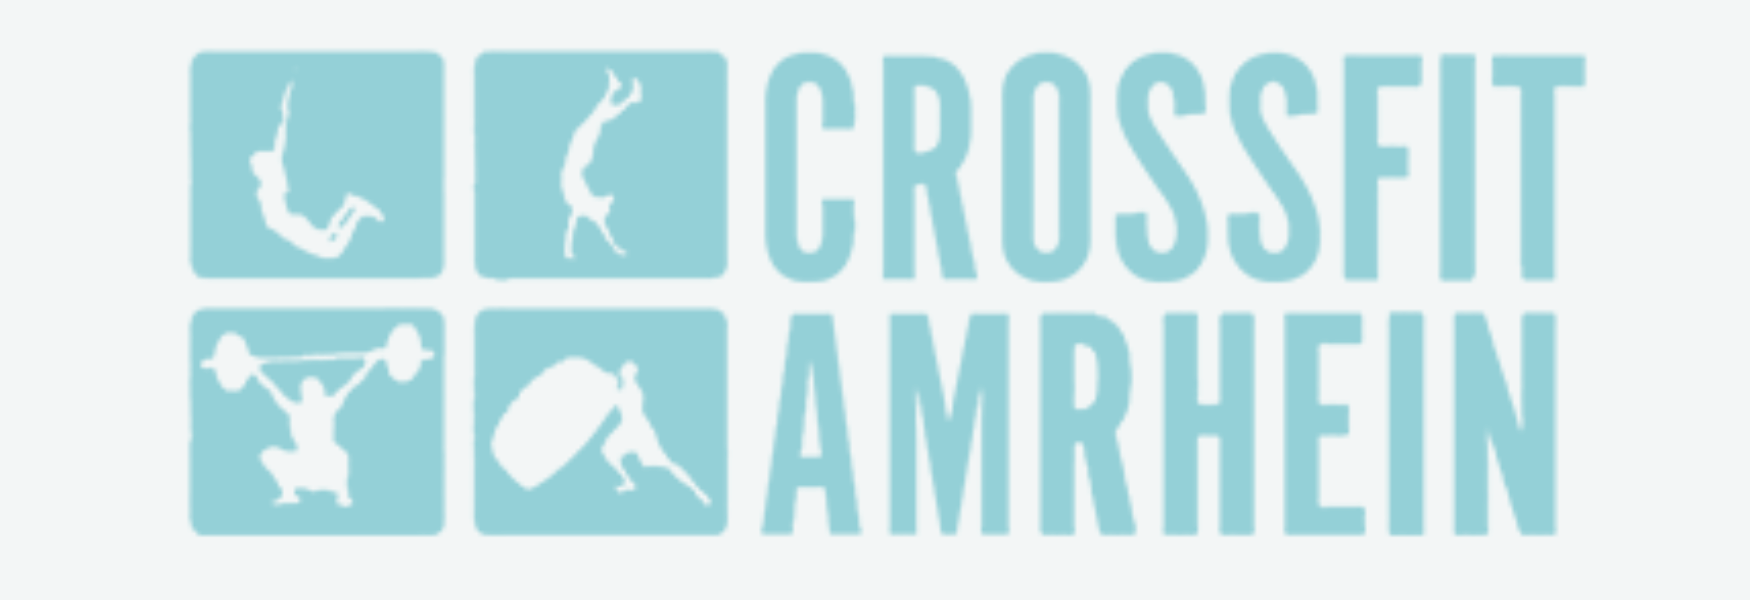 CrossFit am , gravitycoach